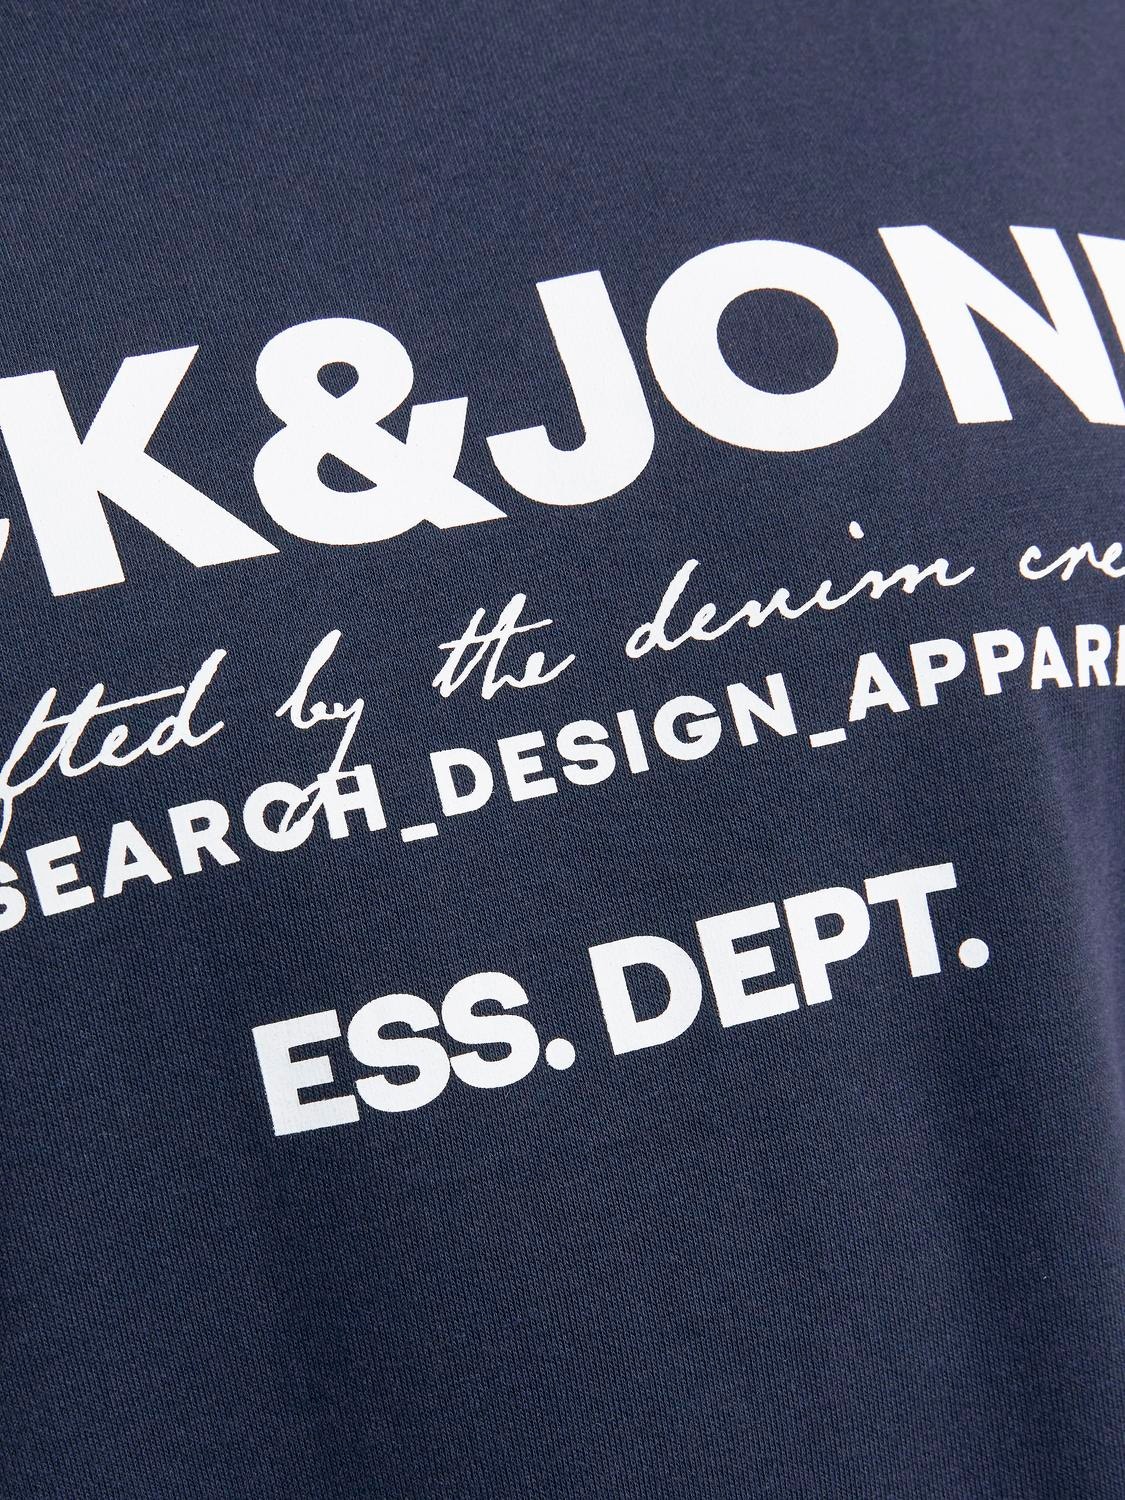 Jack & Jones Plus Size Tryck Crewneck tröja -Navy Blazer - 12251054